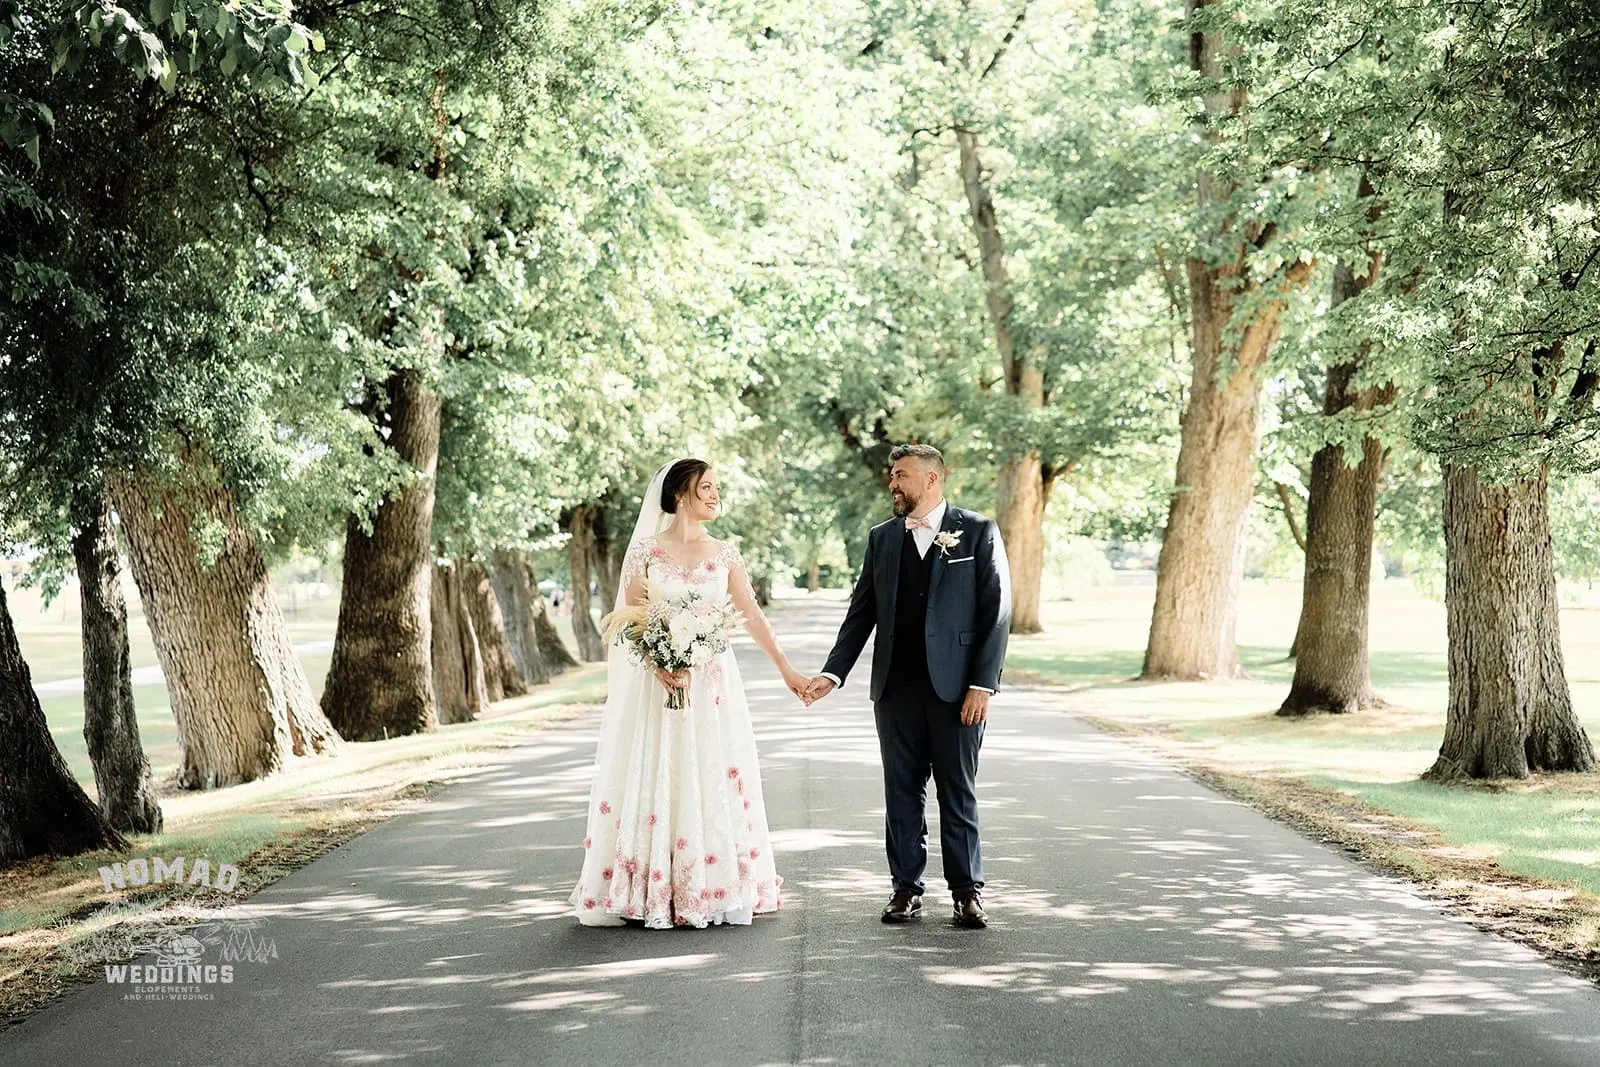 Queenstown New Zealand Elopement Wedding Photographer - A couple walking down a path in Queenstown's summer landscapes.